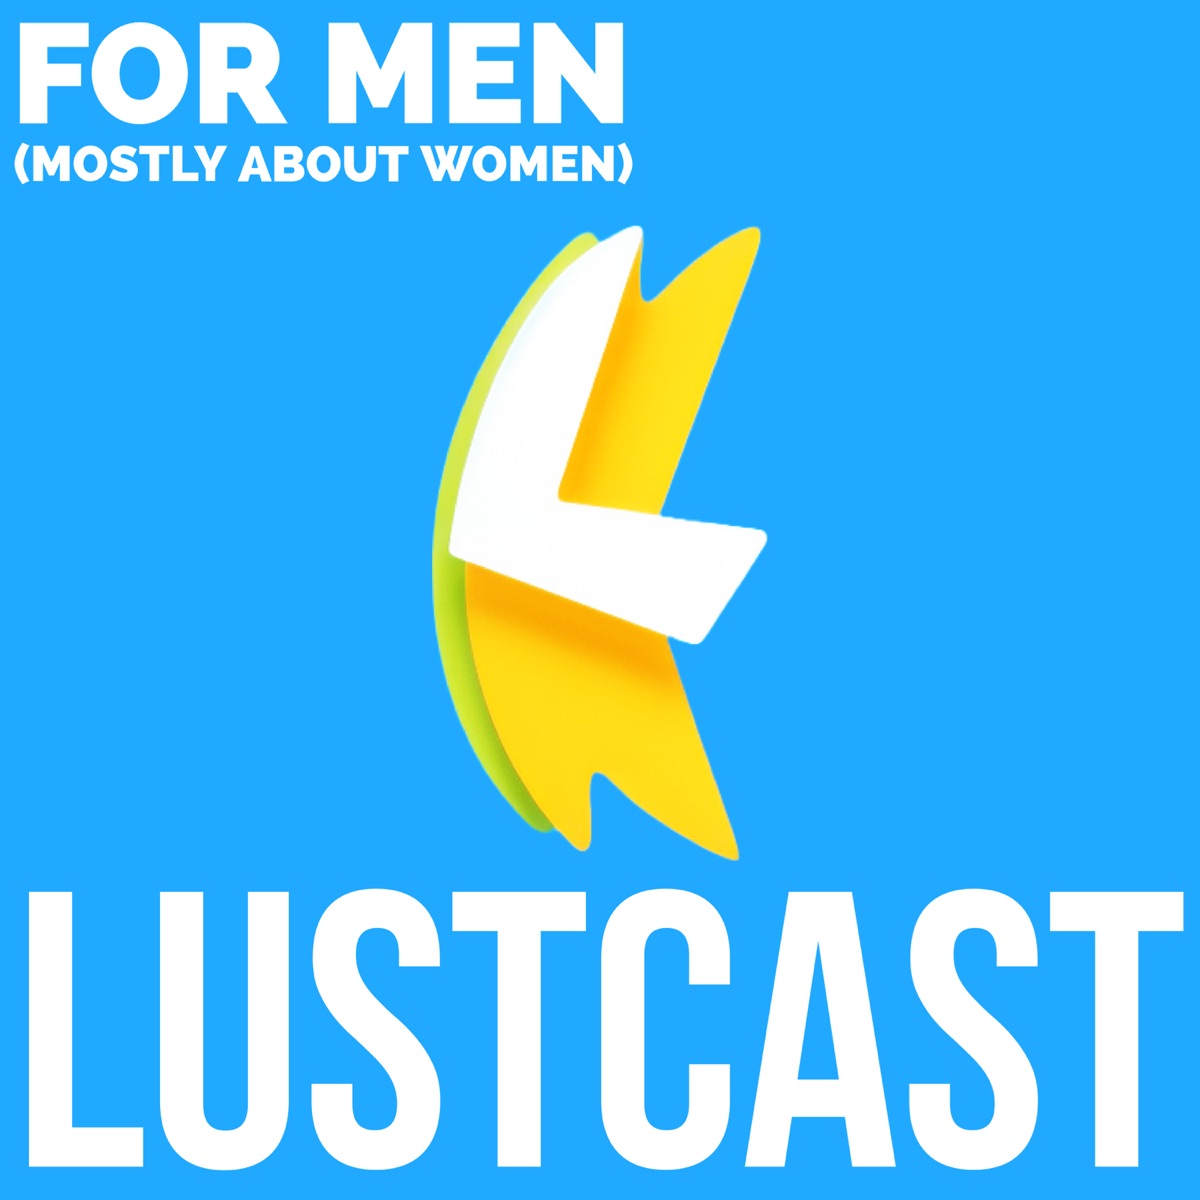 LustCast – Podcast